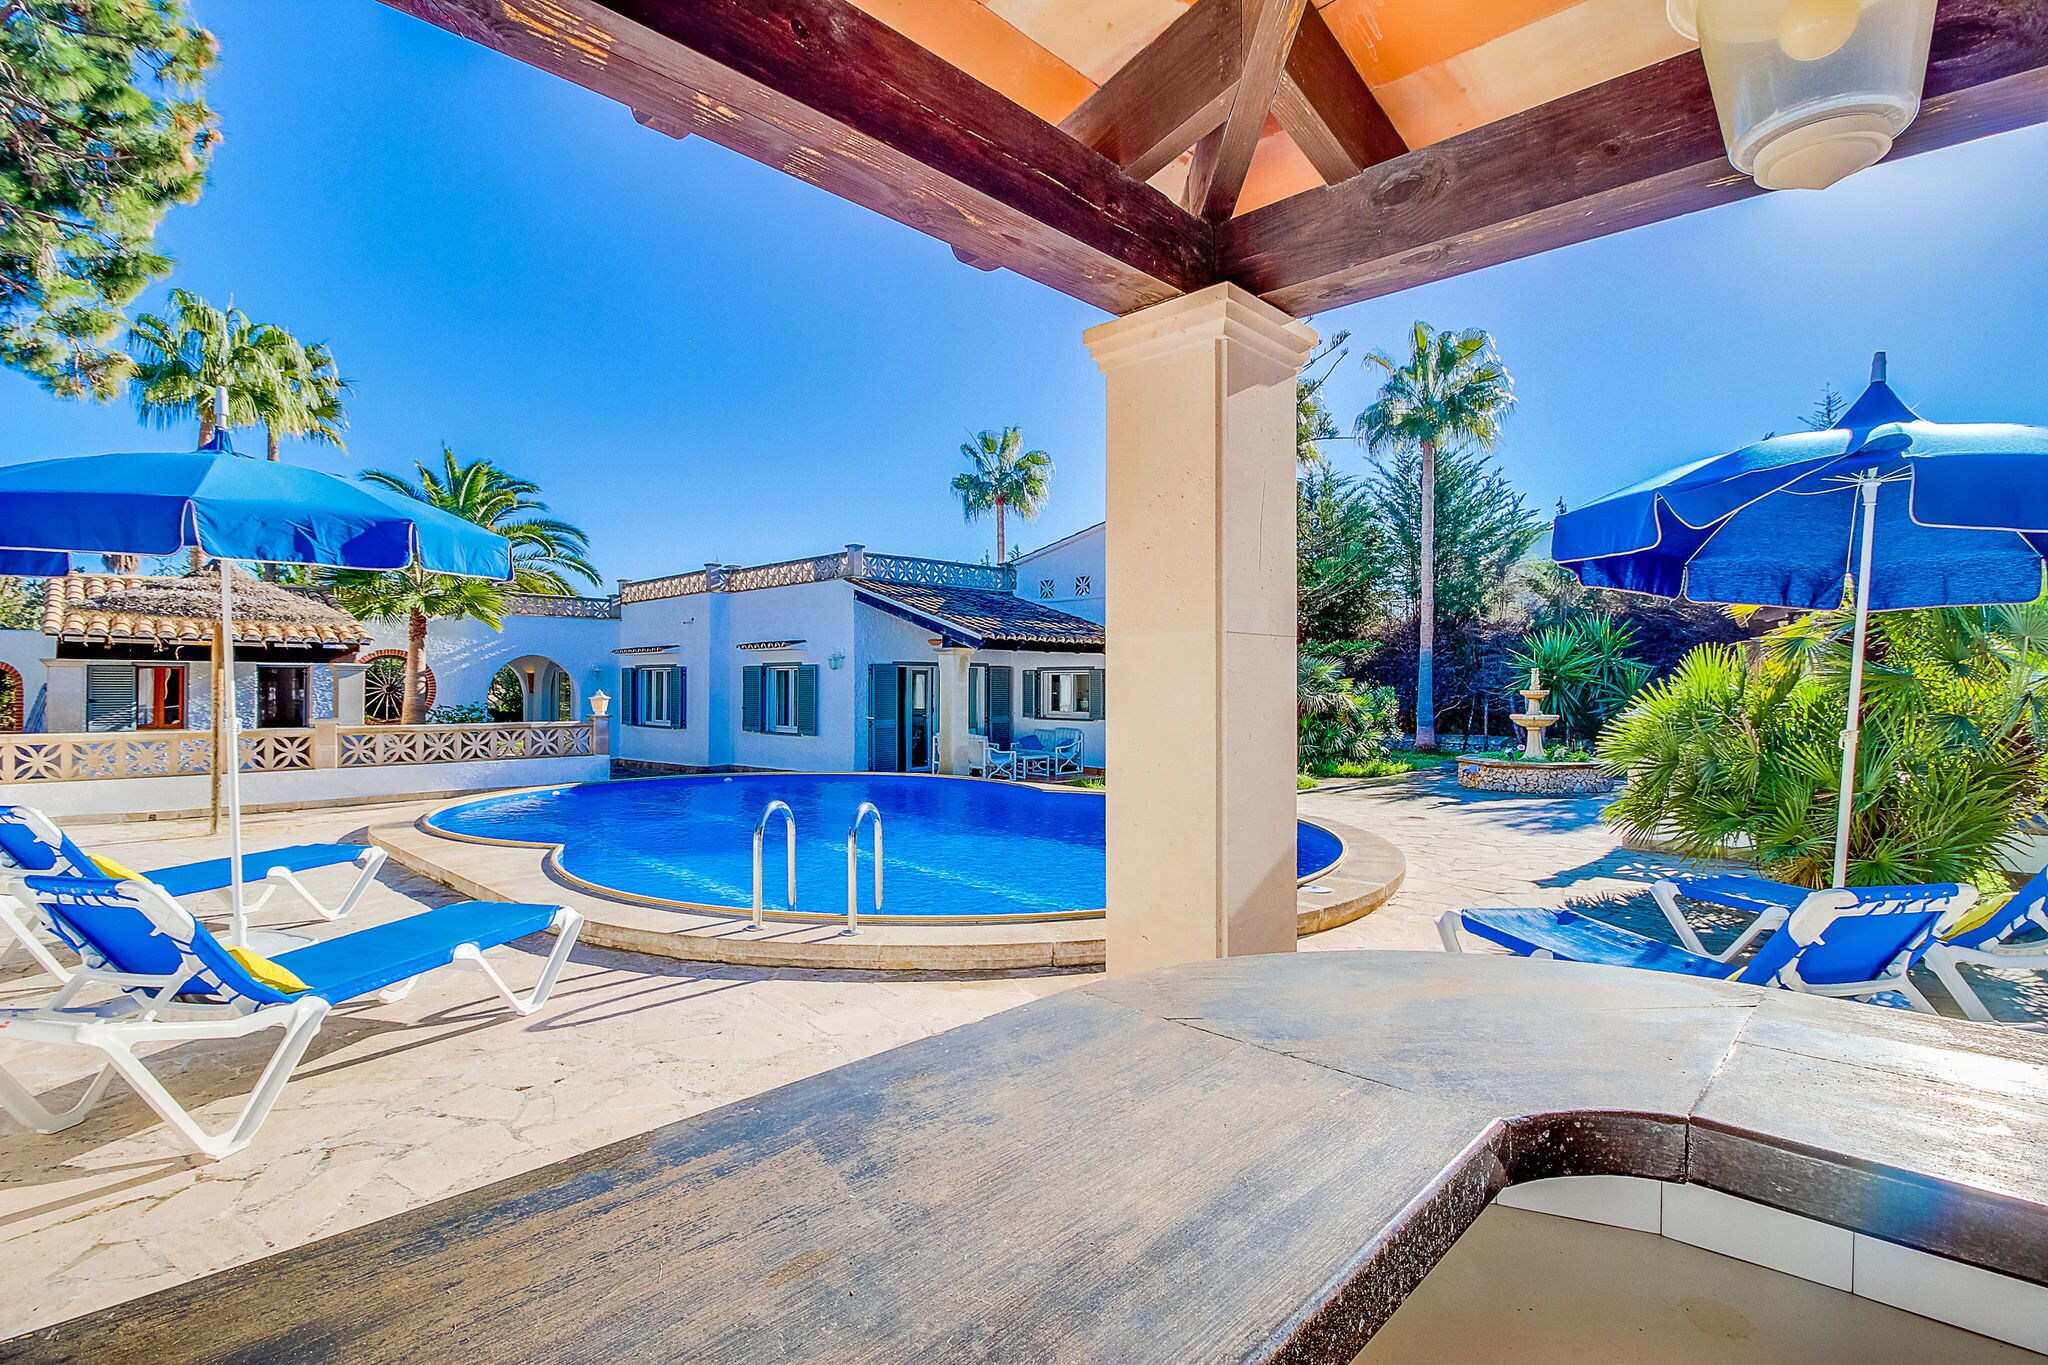 Maison de vacances confortable à Cala Murada avec piscine